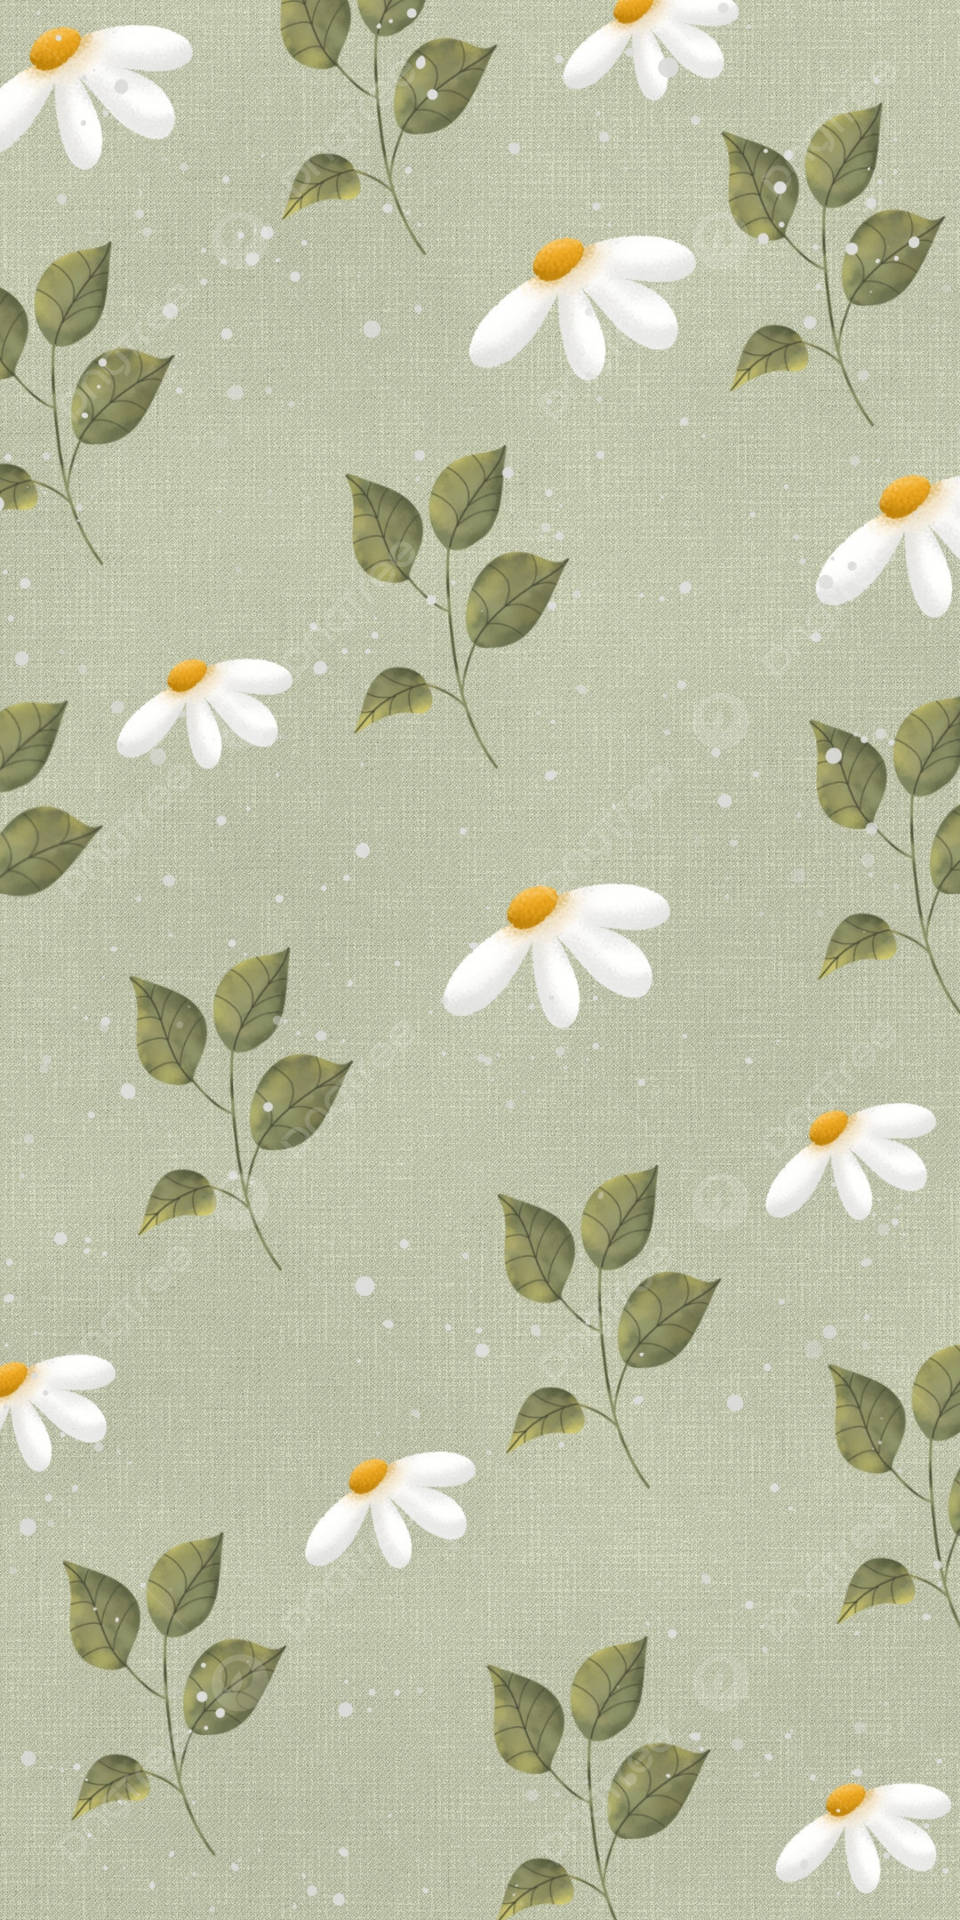 Floral Half Daisy Phone Wallpaper